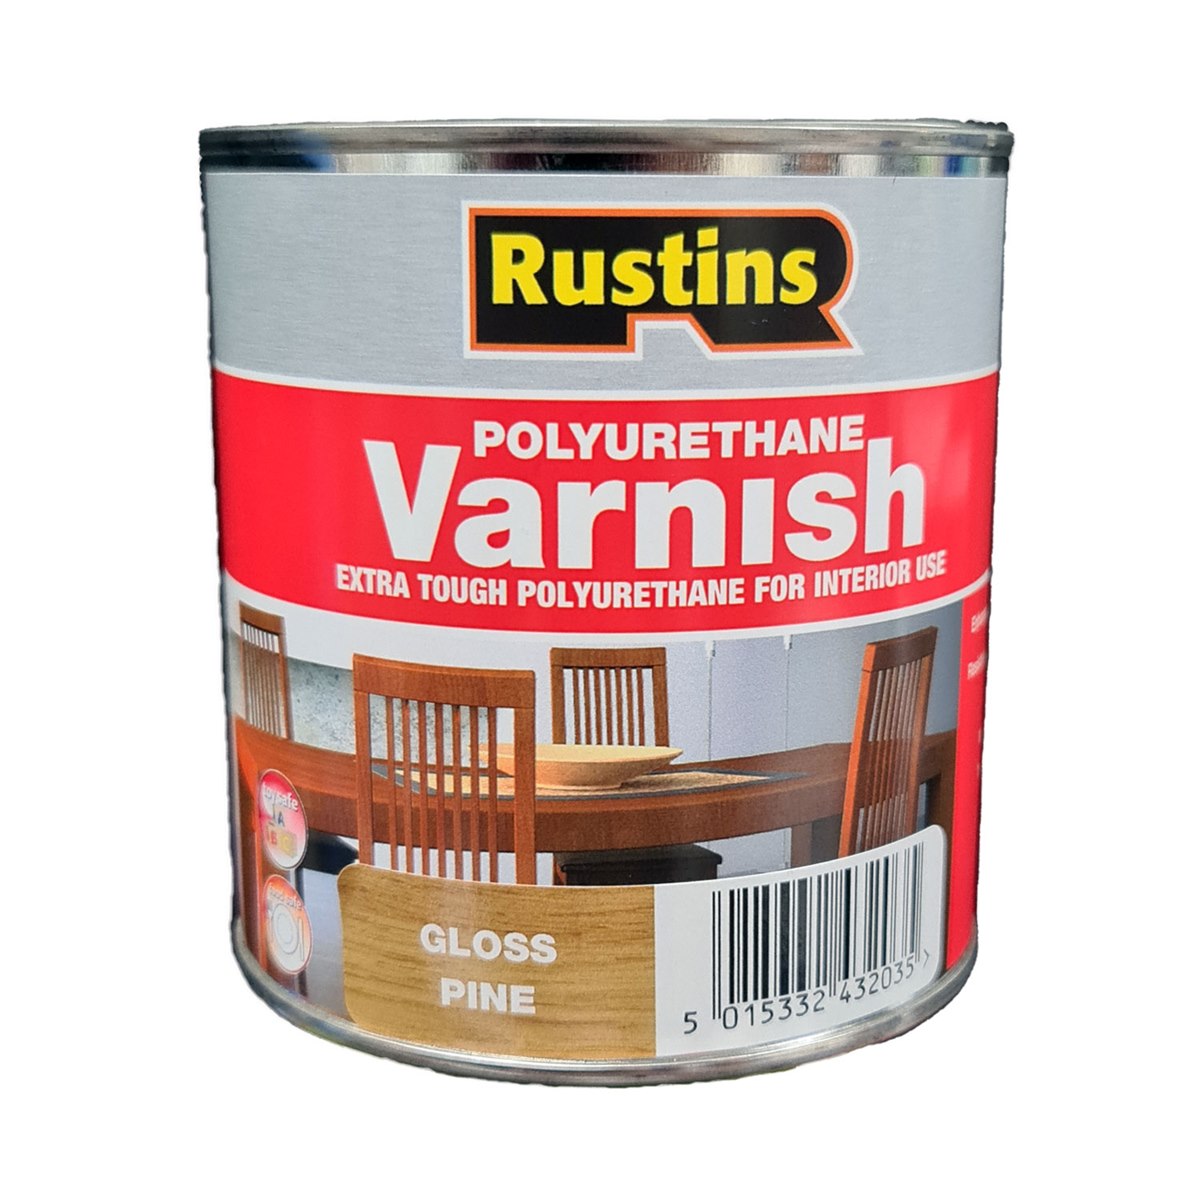 Rustins Polyurethane Varnish Gloss Pine - 1 Litre